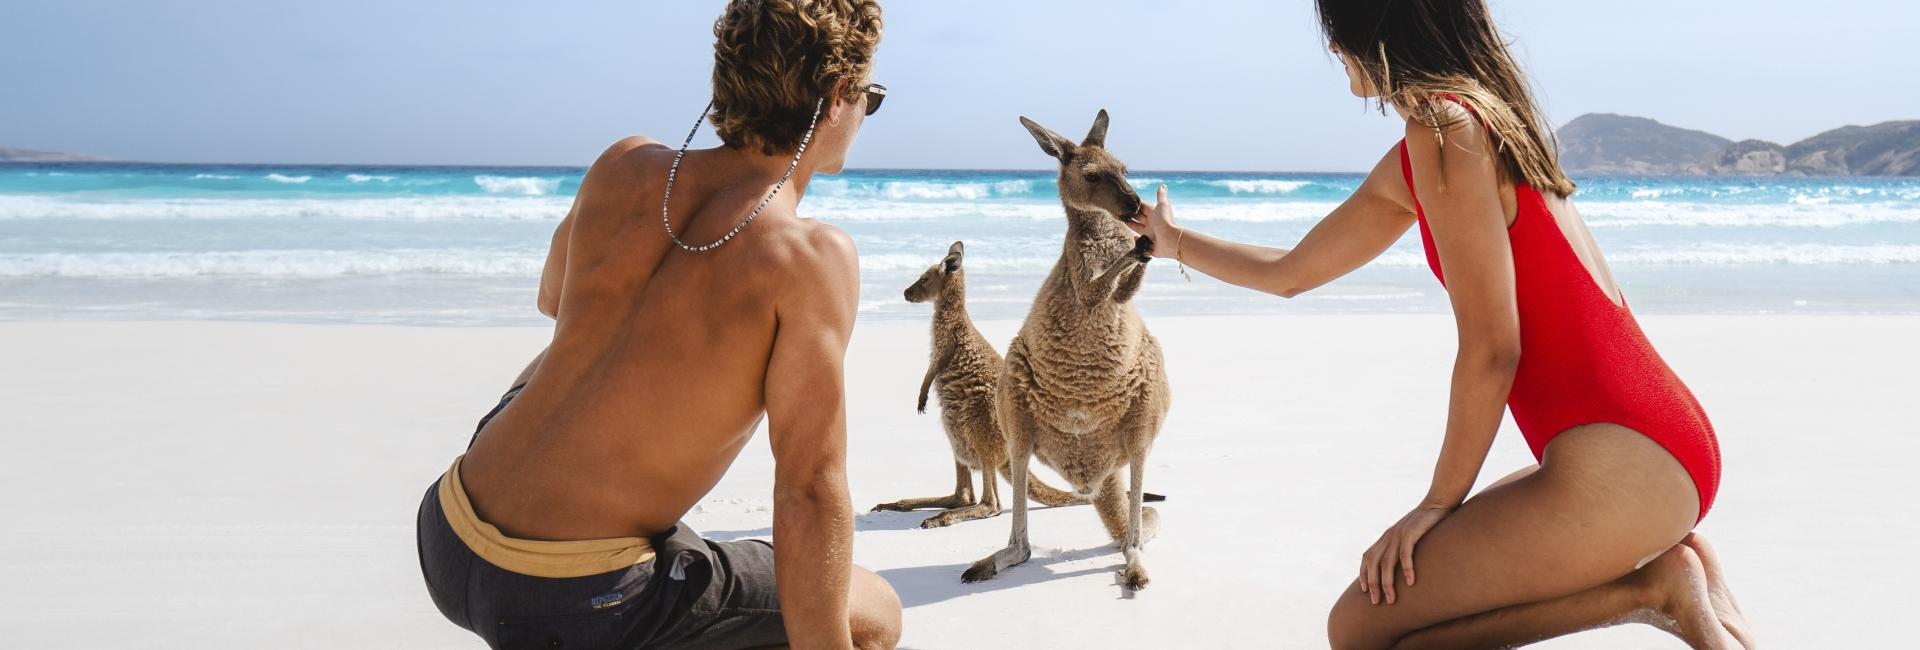 Kangaroos at Lucky Bay Beach near Esperance [image by OSPREYCREATIVE.COM]-jumbotron